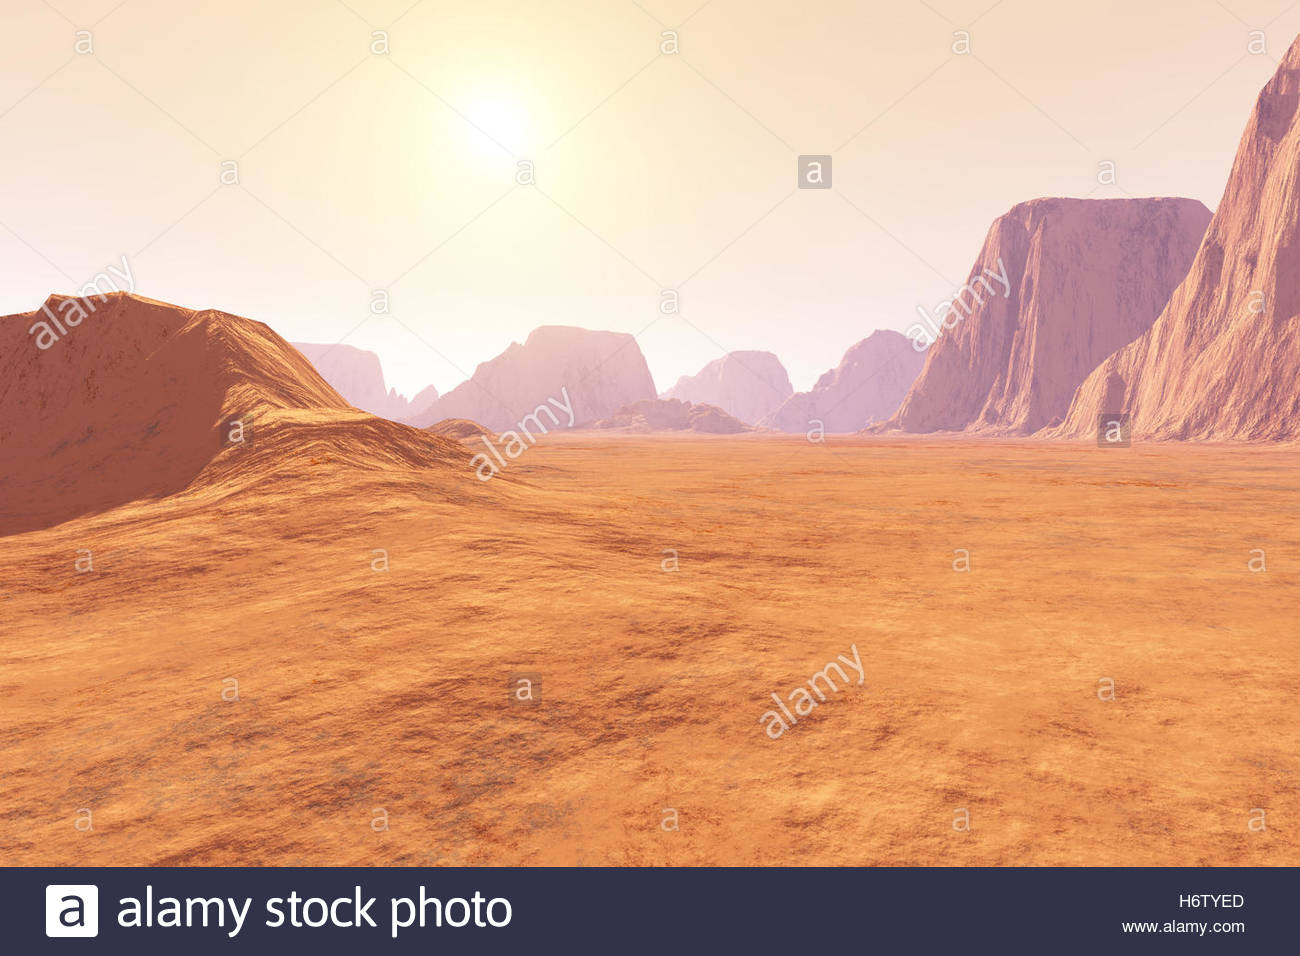 environment-enviroment-hill-mountains-horizon-stone-space-desert-wasteland-H6TYED.jpg